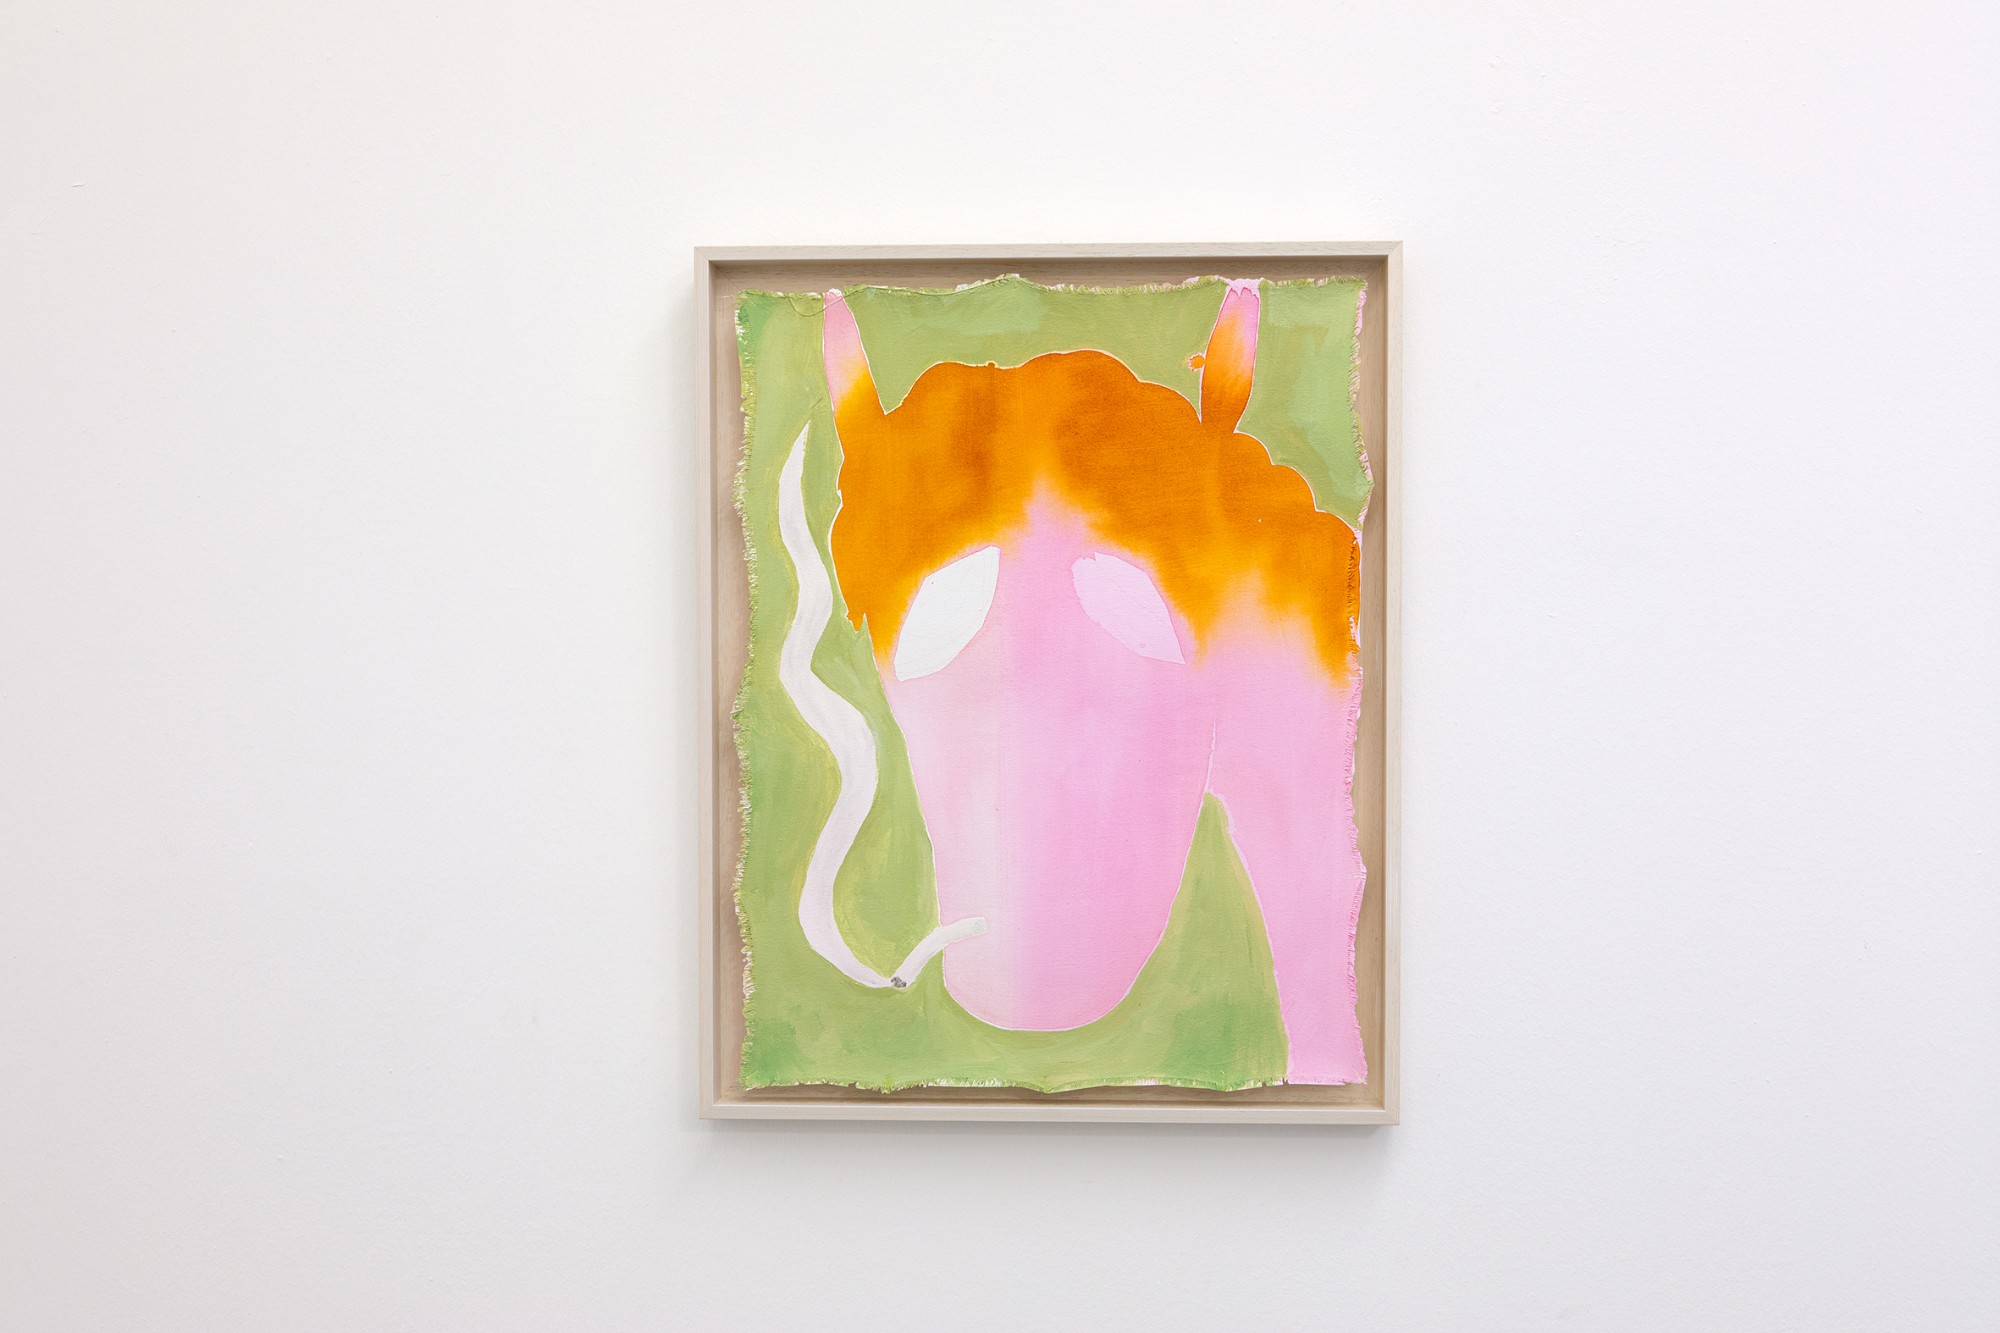 Sarah Bogner, Raucher Lindgrün, 2022, egg tempera, ink on canvas, 54 x 42 cm, framed